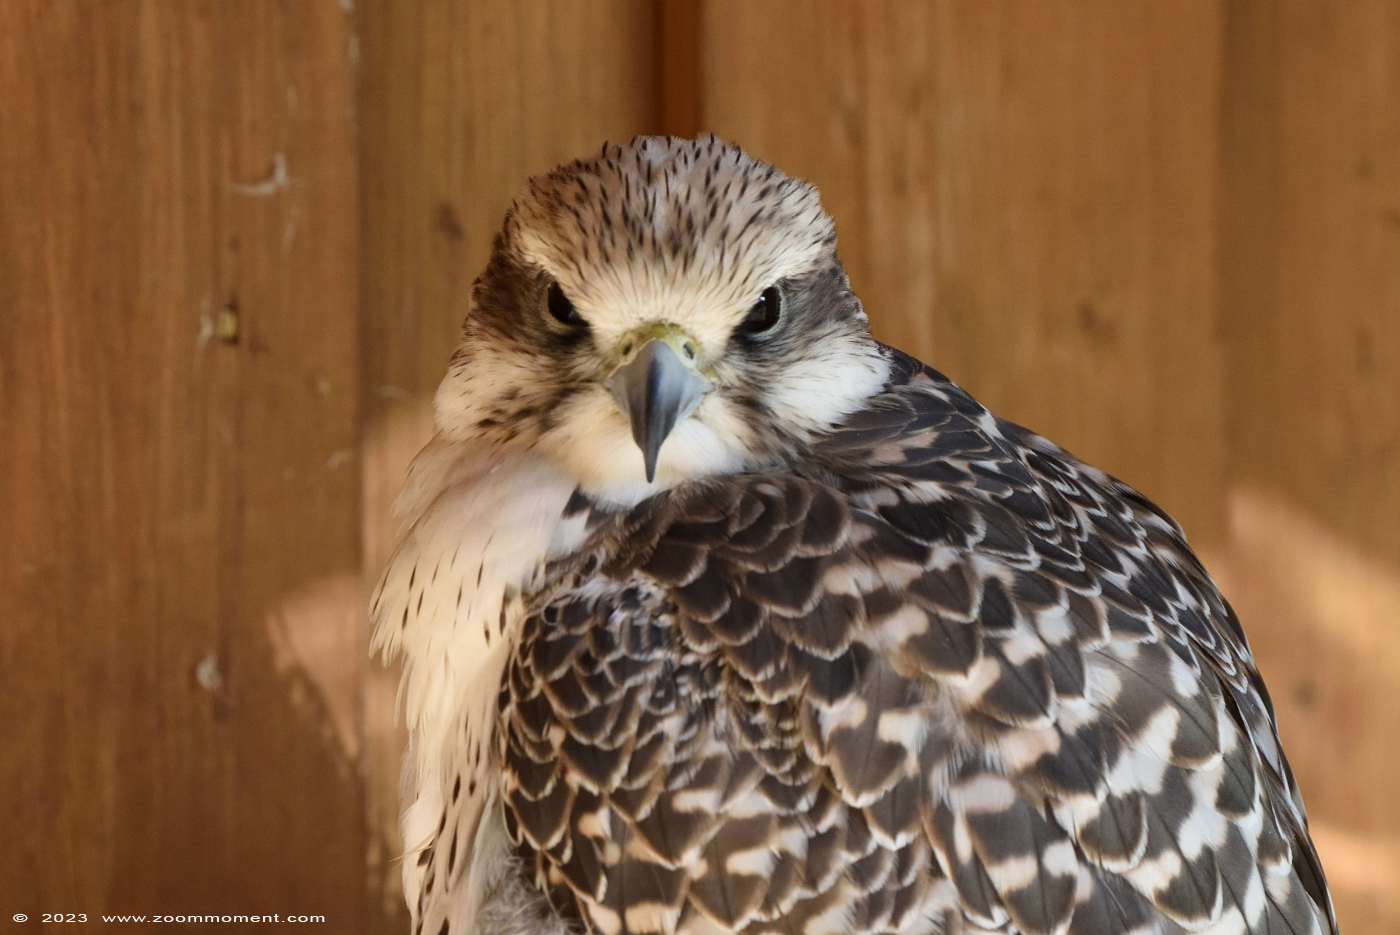 sakervalk ( Falco cherrug ) saker falcon
Trefwoorden: Neunkircher Zoo Germany sakervalk Falco cherrug saker falcon